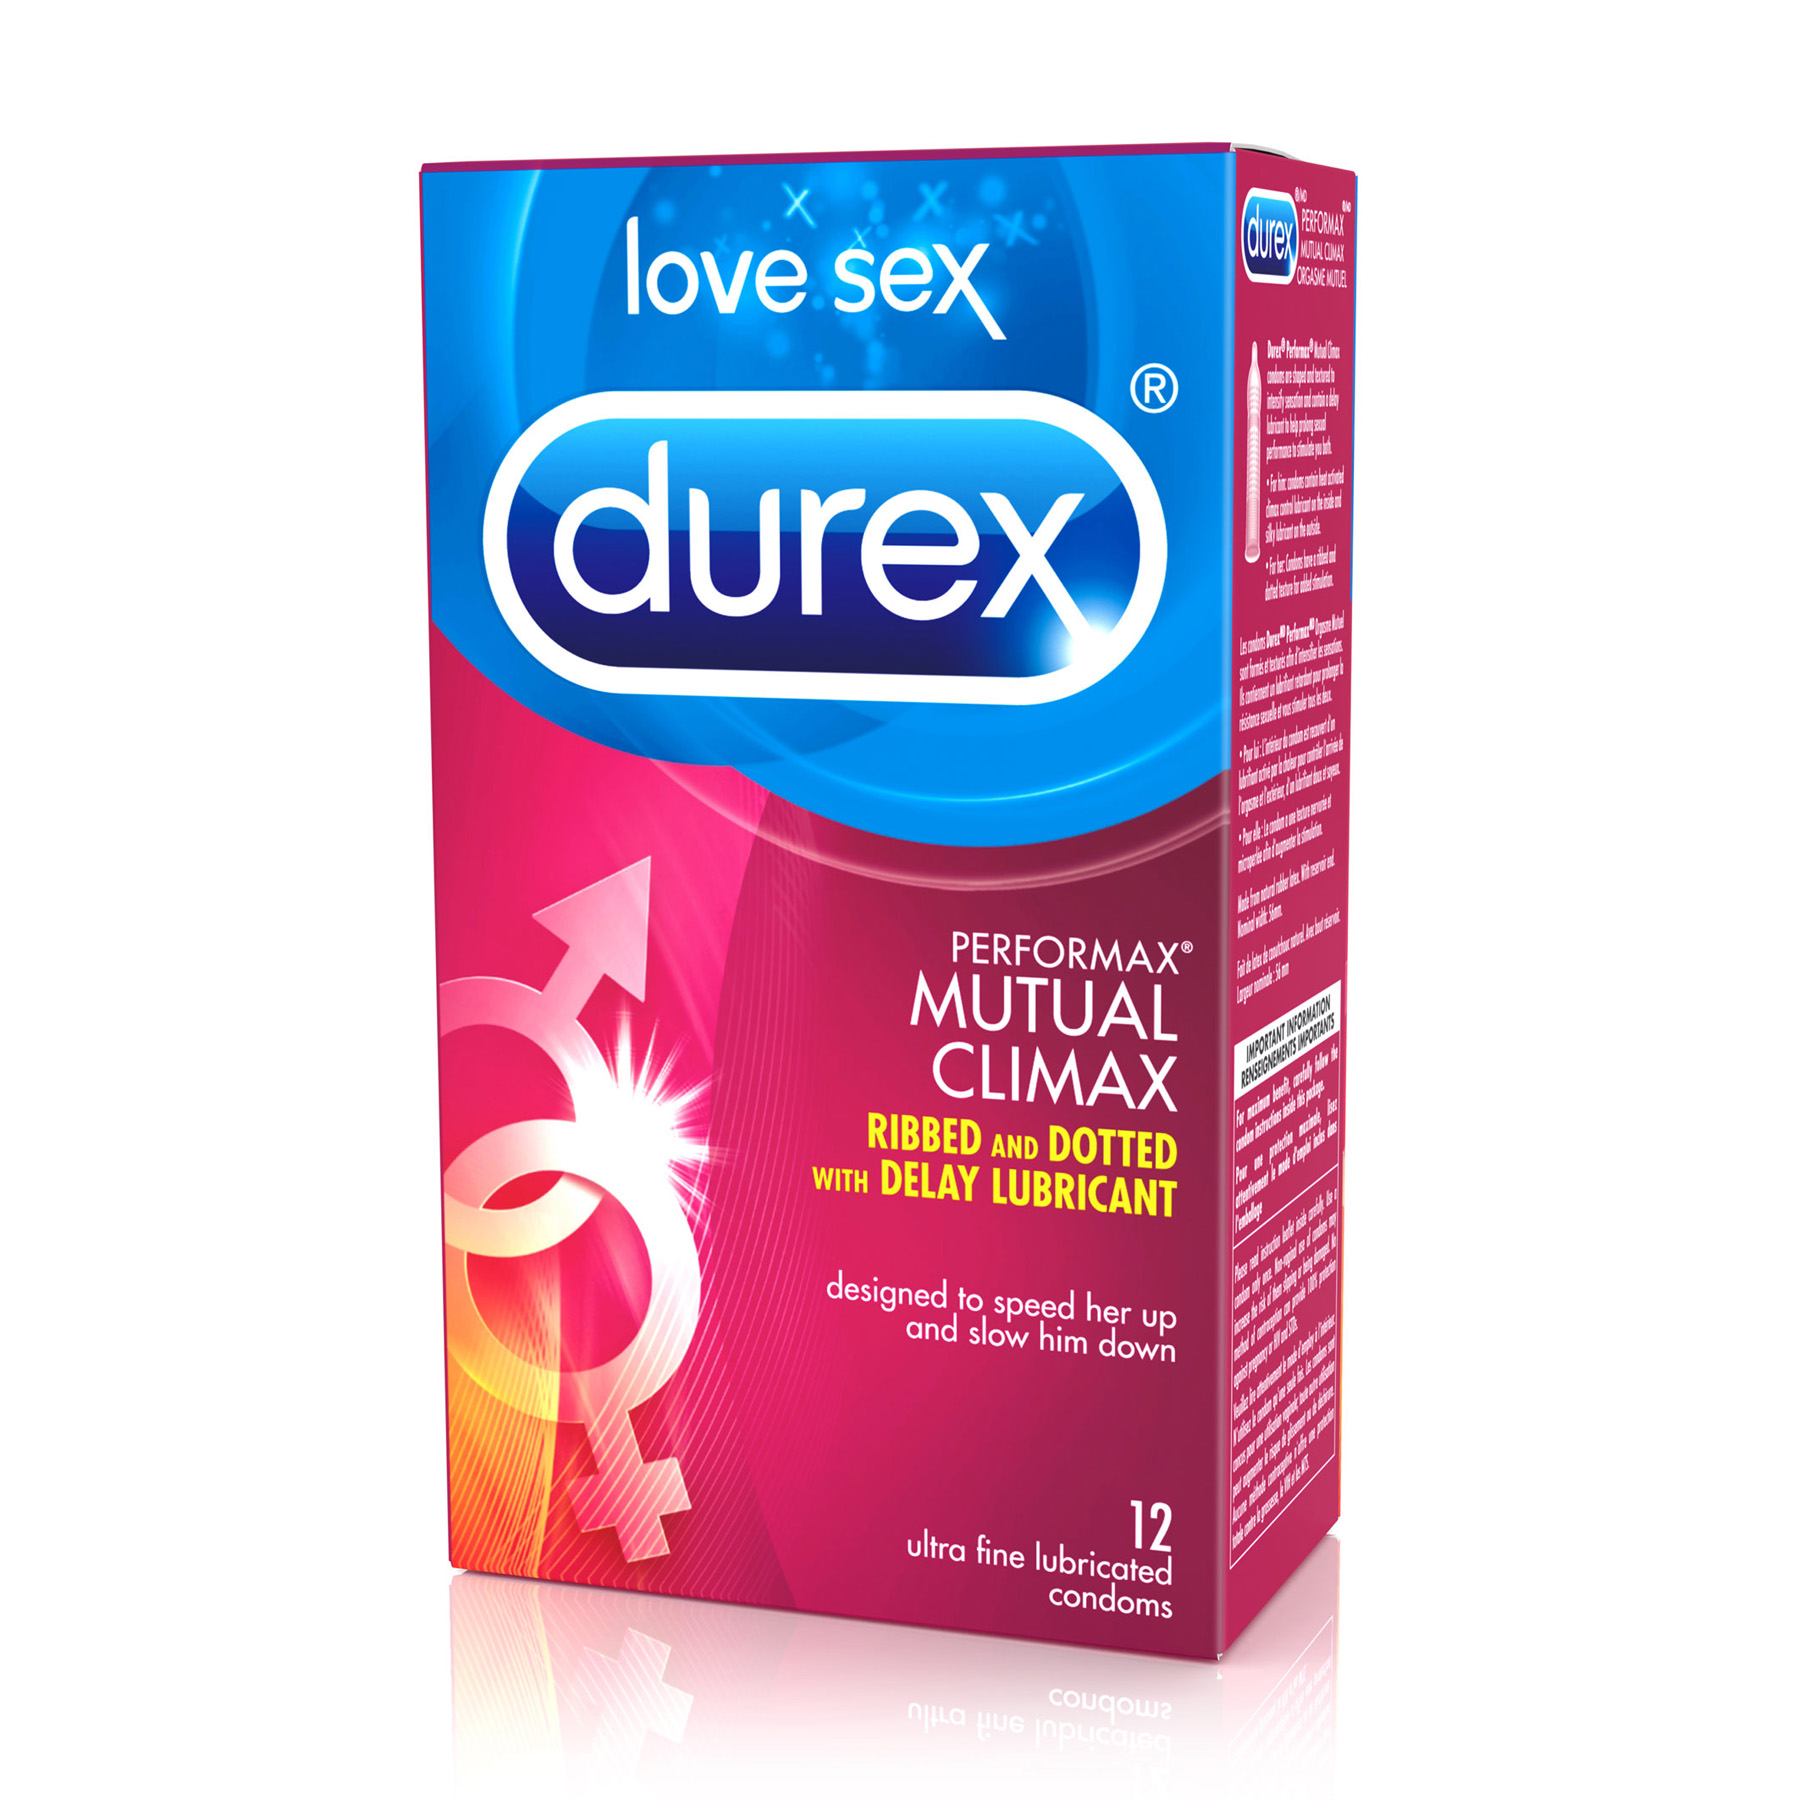 DUREX Performax Mutual Climax Lubricated Condoms Canada